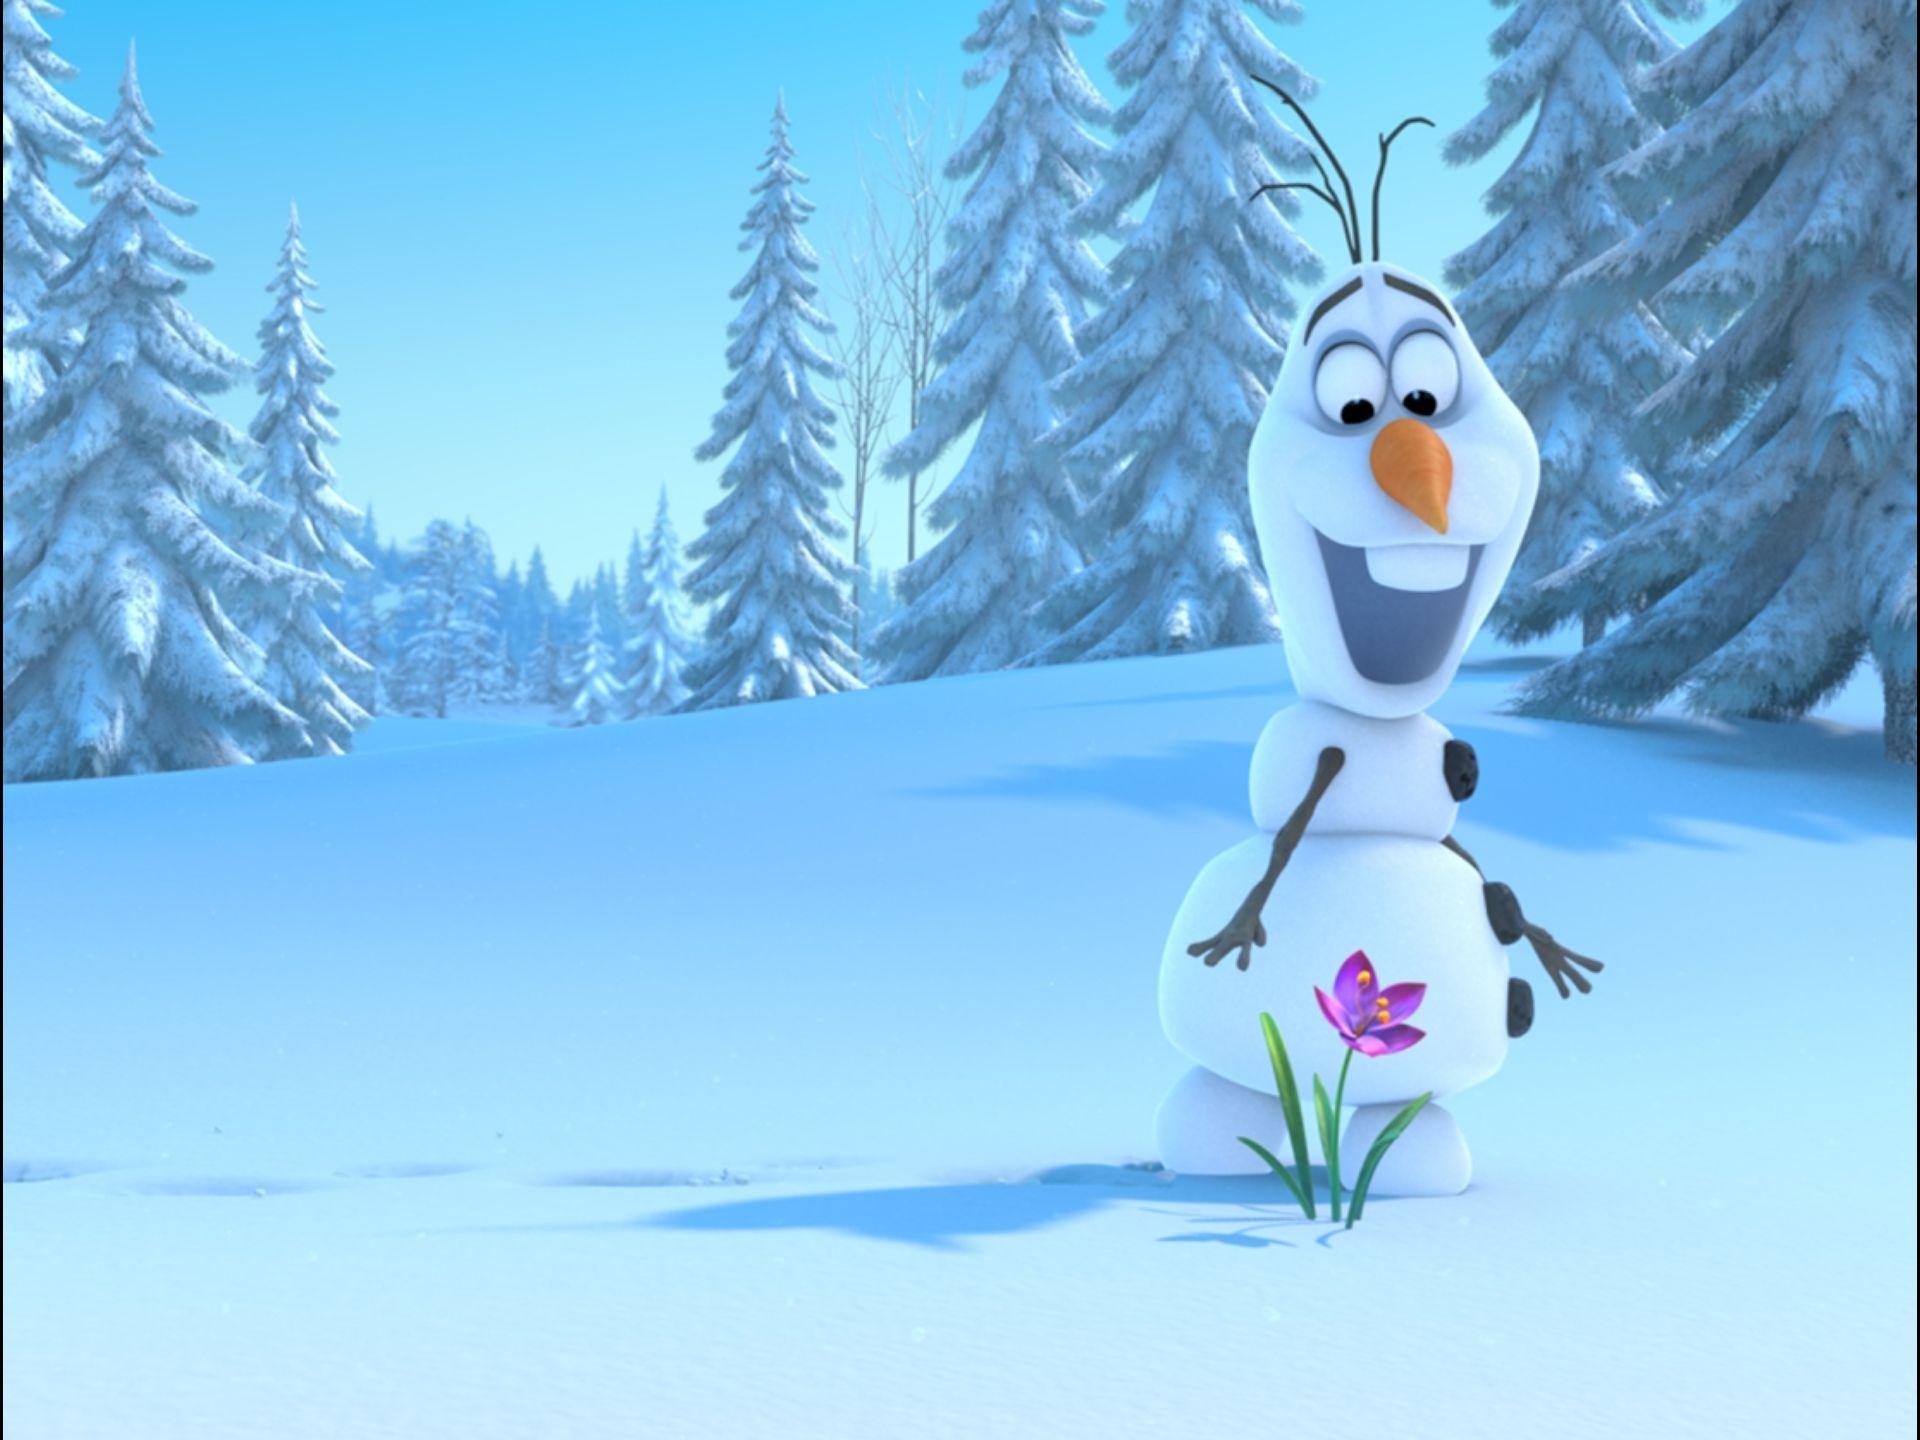 Disney Frozen Olaf HD Wallpaper Image for Tablet